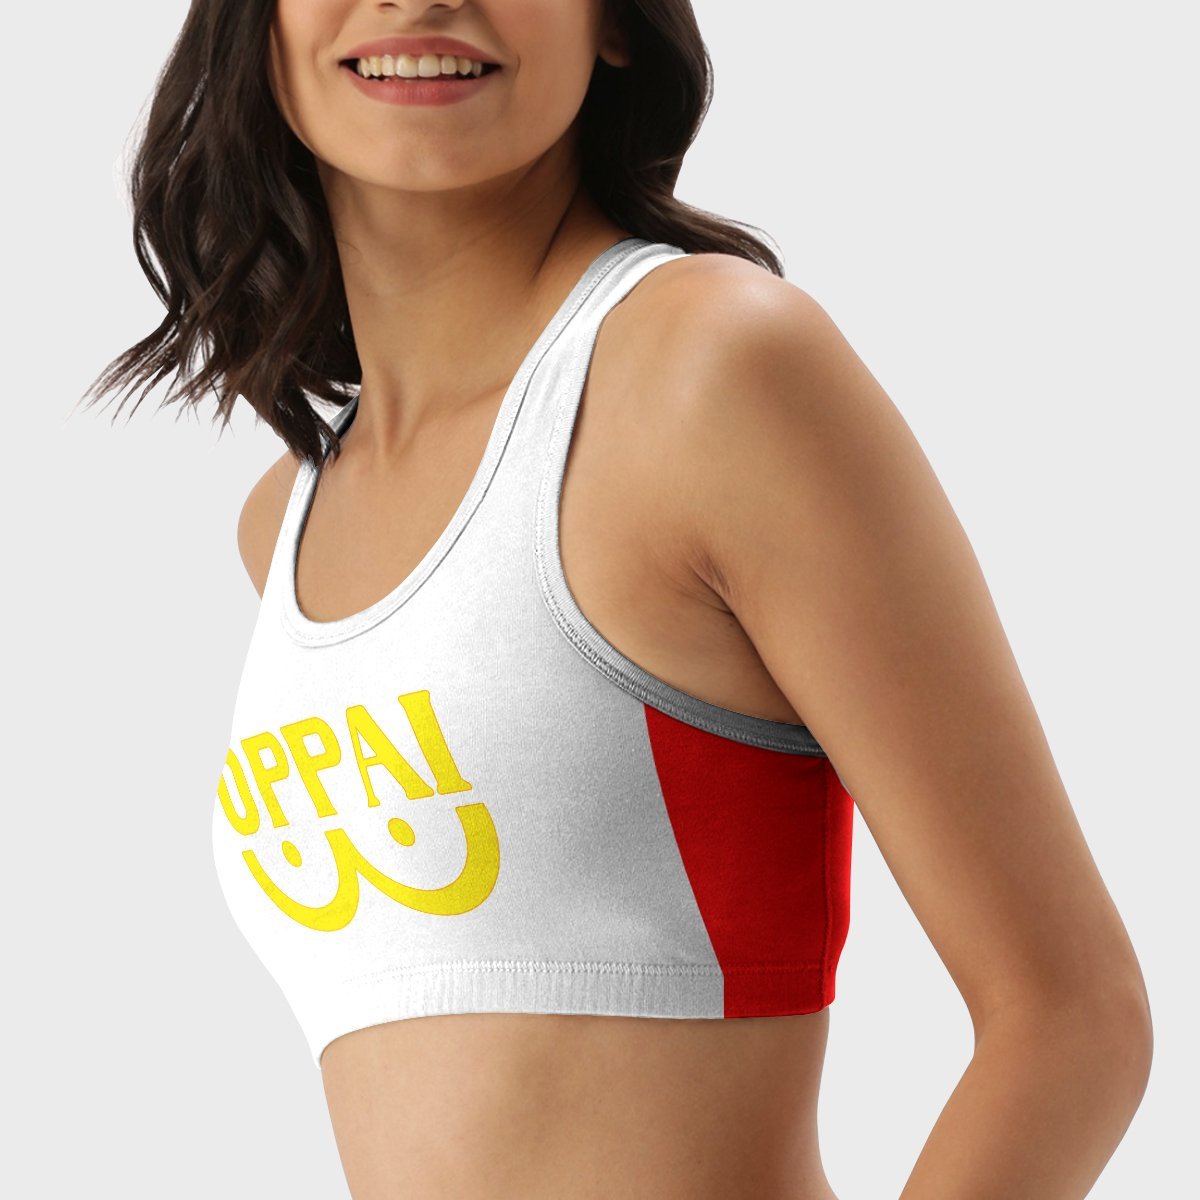 saitama oppai active wear set 995596 - Anime Swimsuits